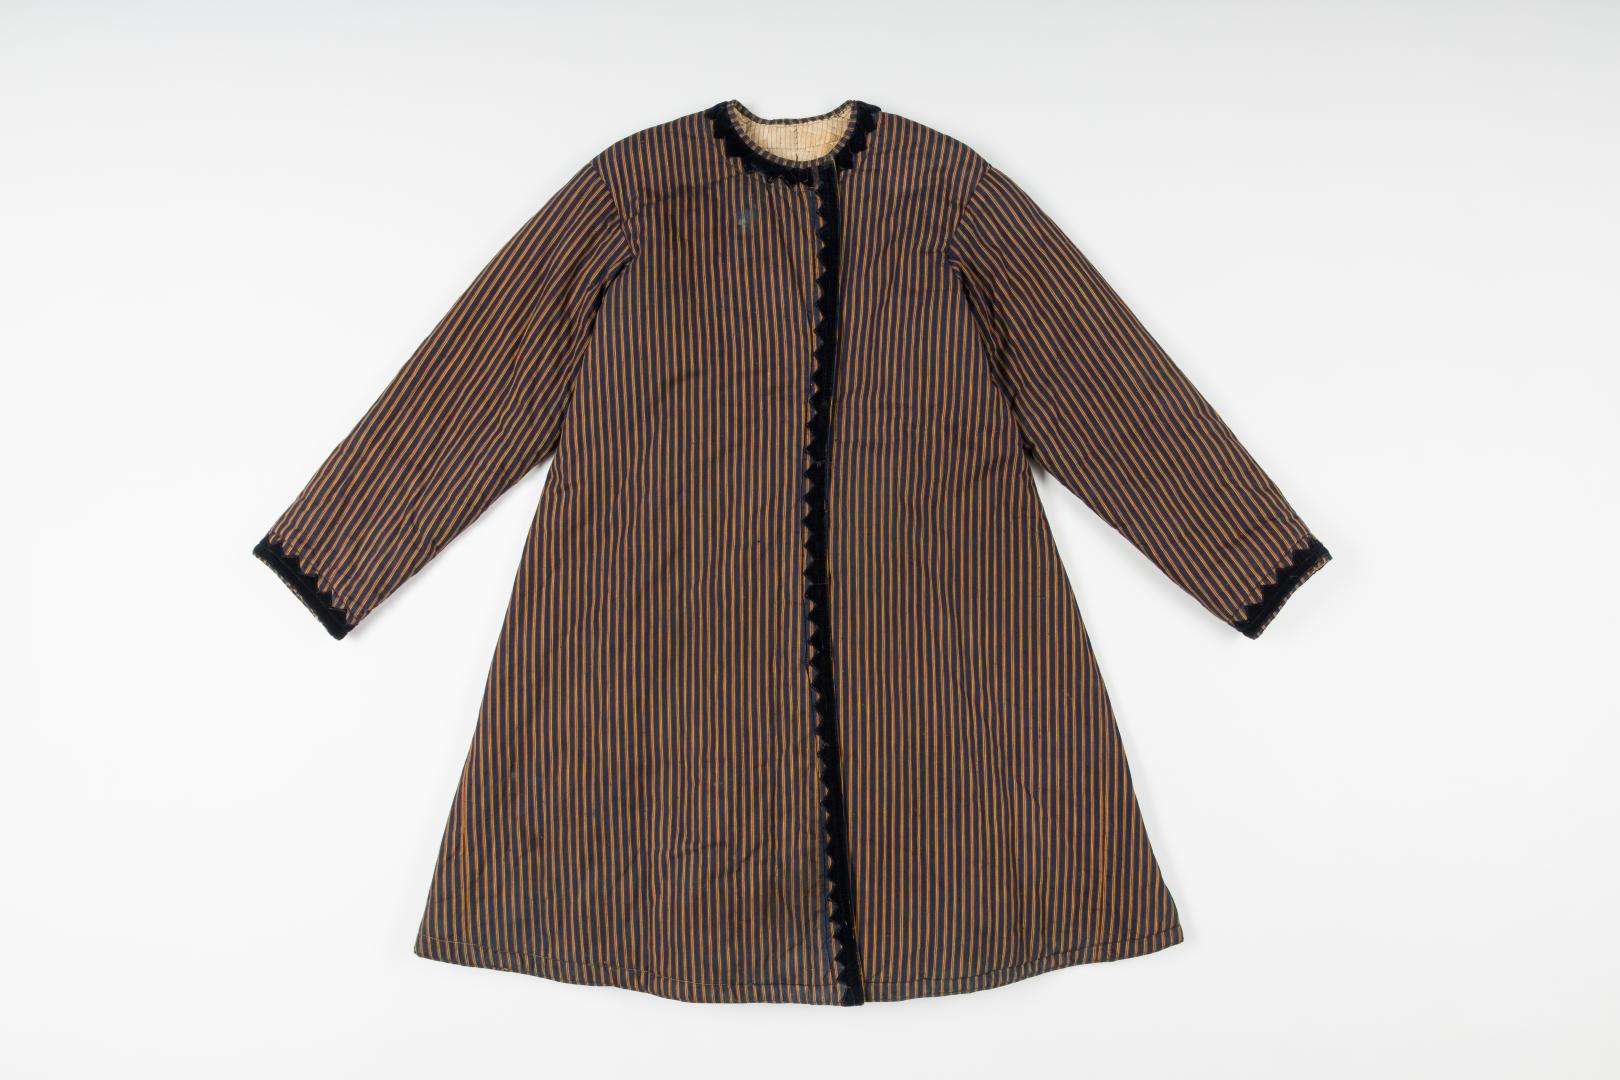 Yupka (striped women's overcoat)